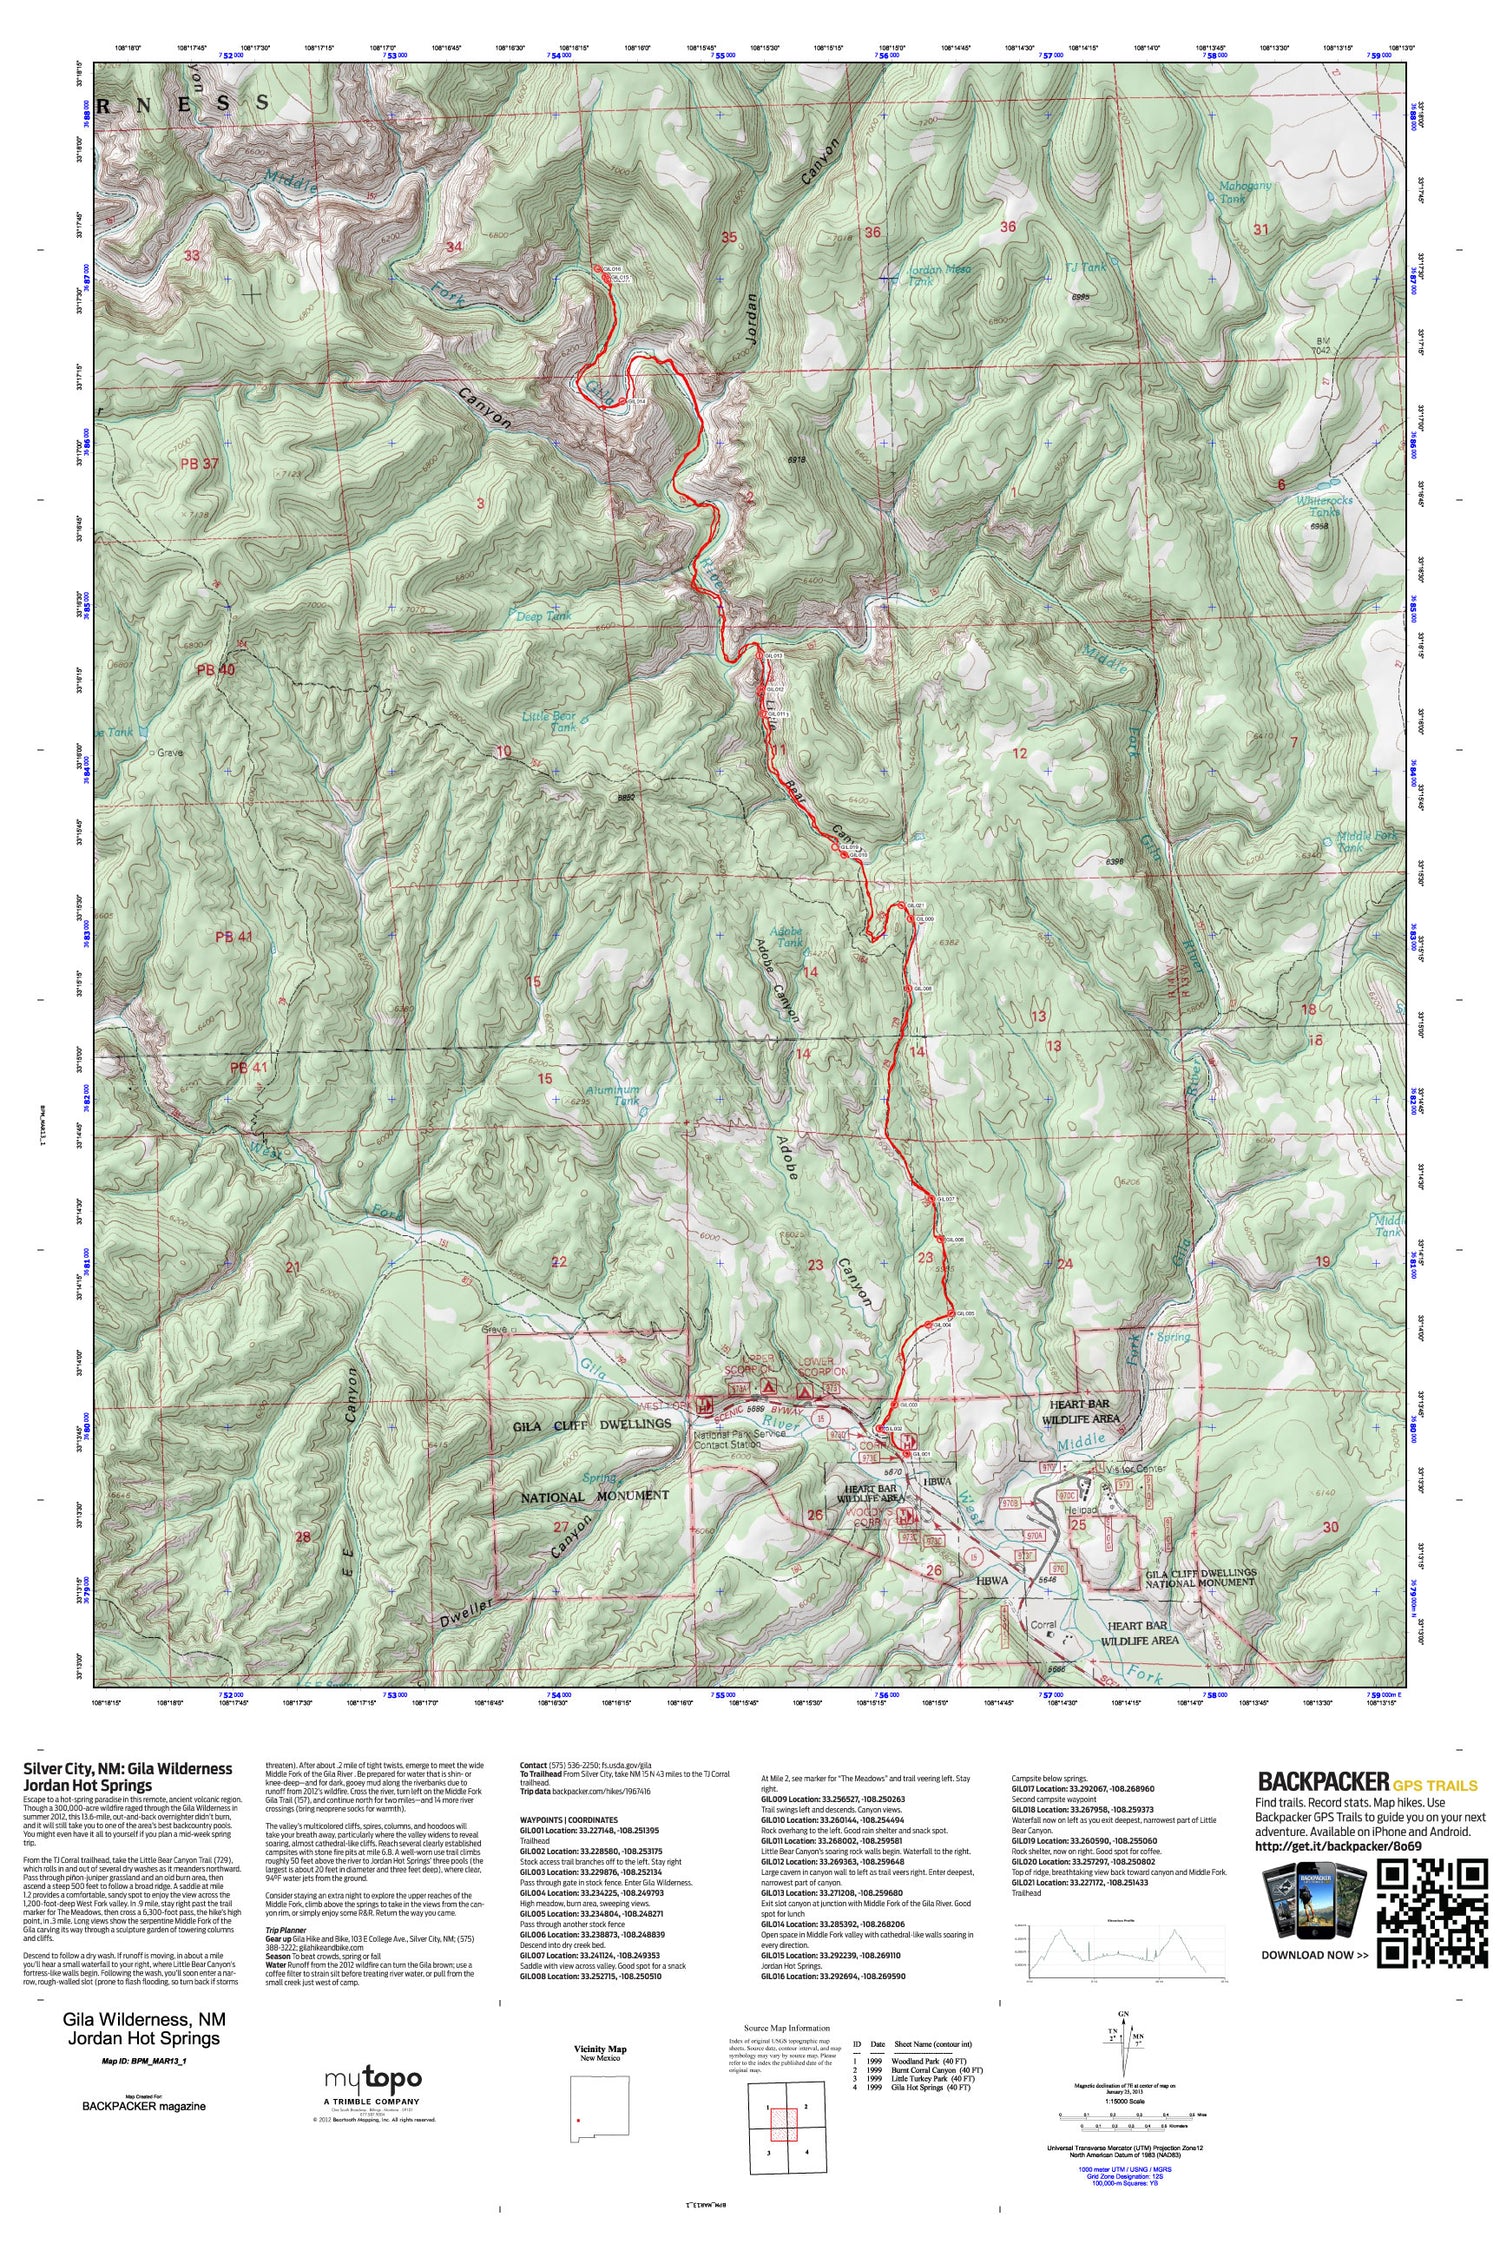 Jordan Hot Springs Map (Gila Wilderness, New Mexico) Image